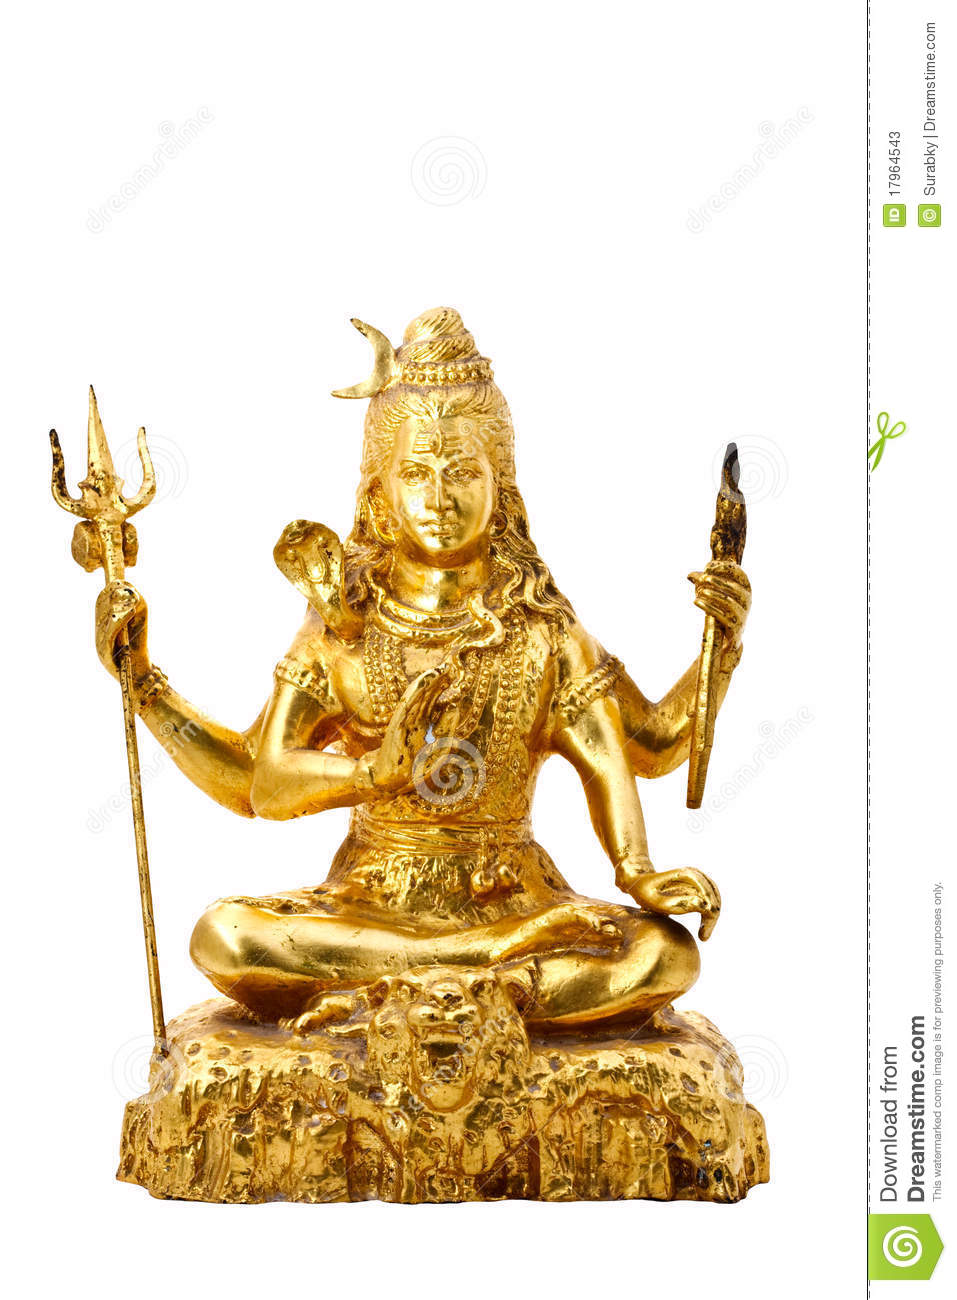 Narai Supreme God Of India Culture Stock Photos   Image  17964543